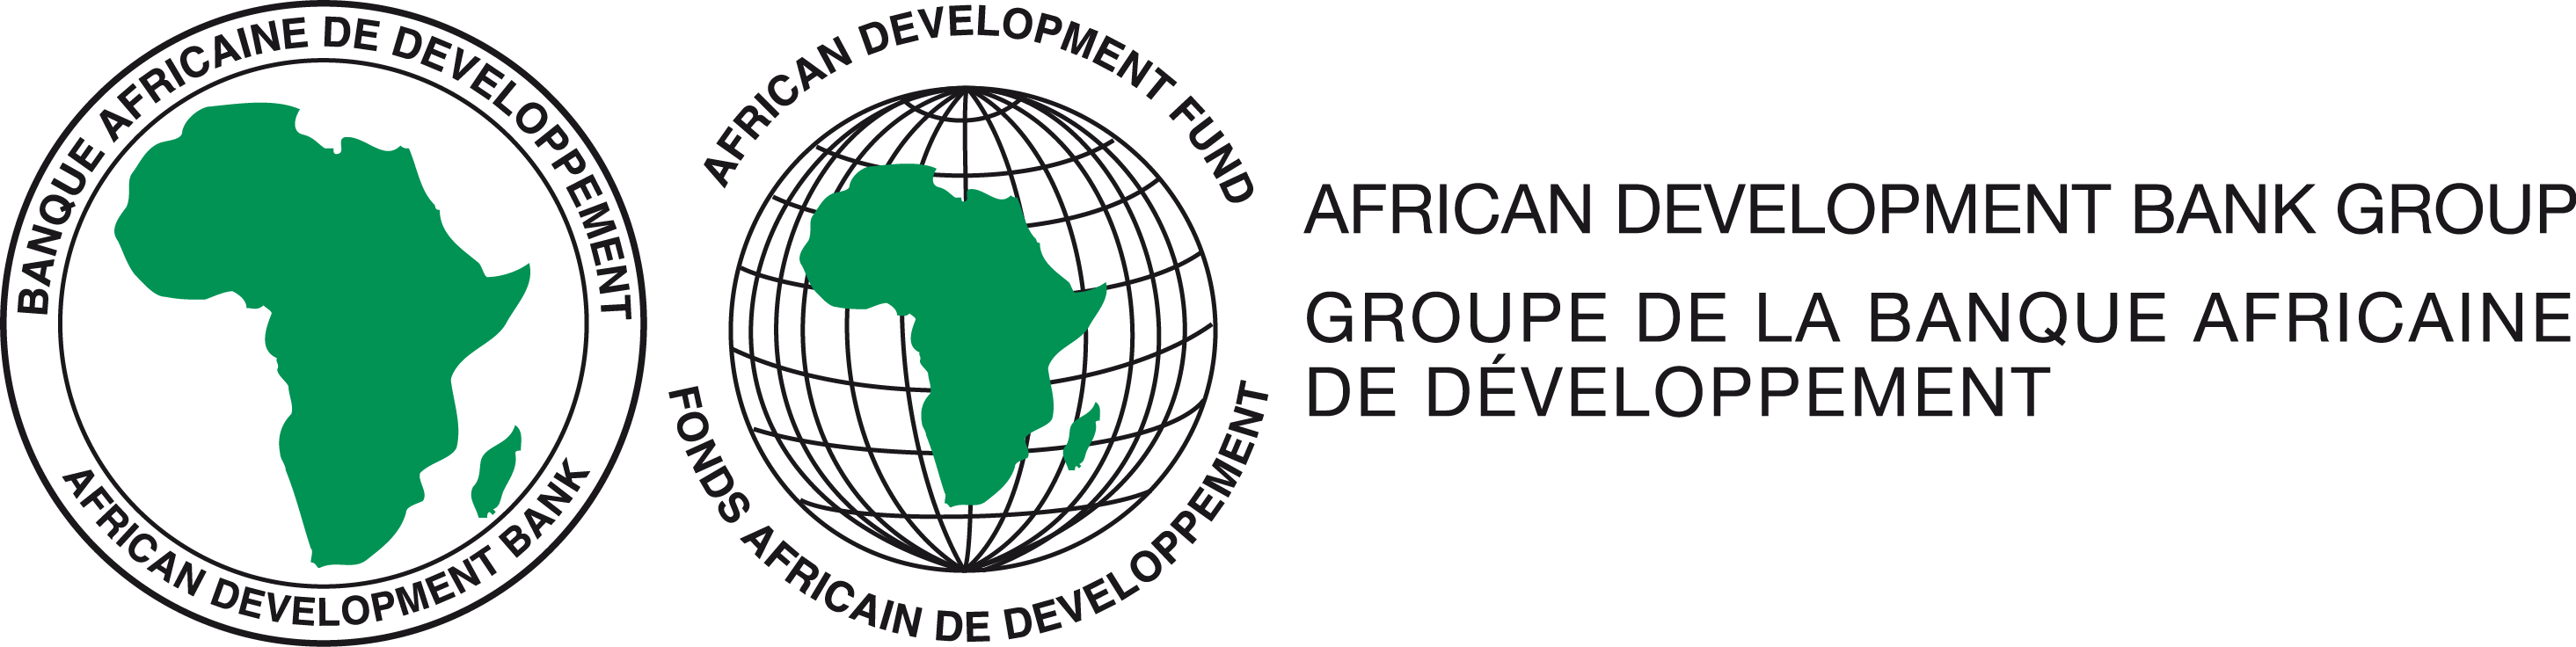 Image: logo of African Development Bank (AfDB)